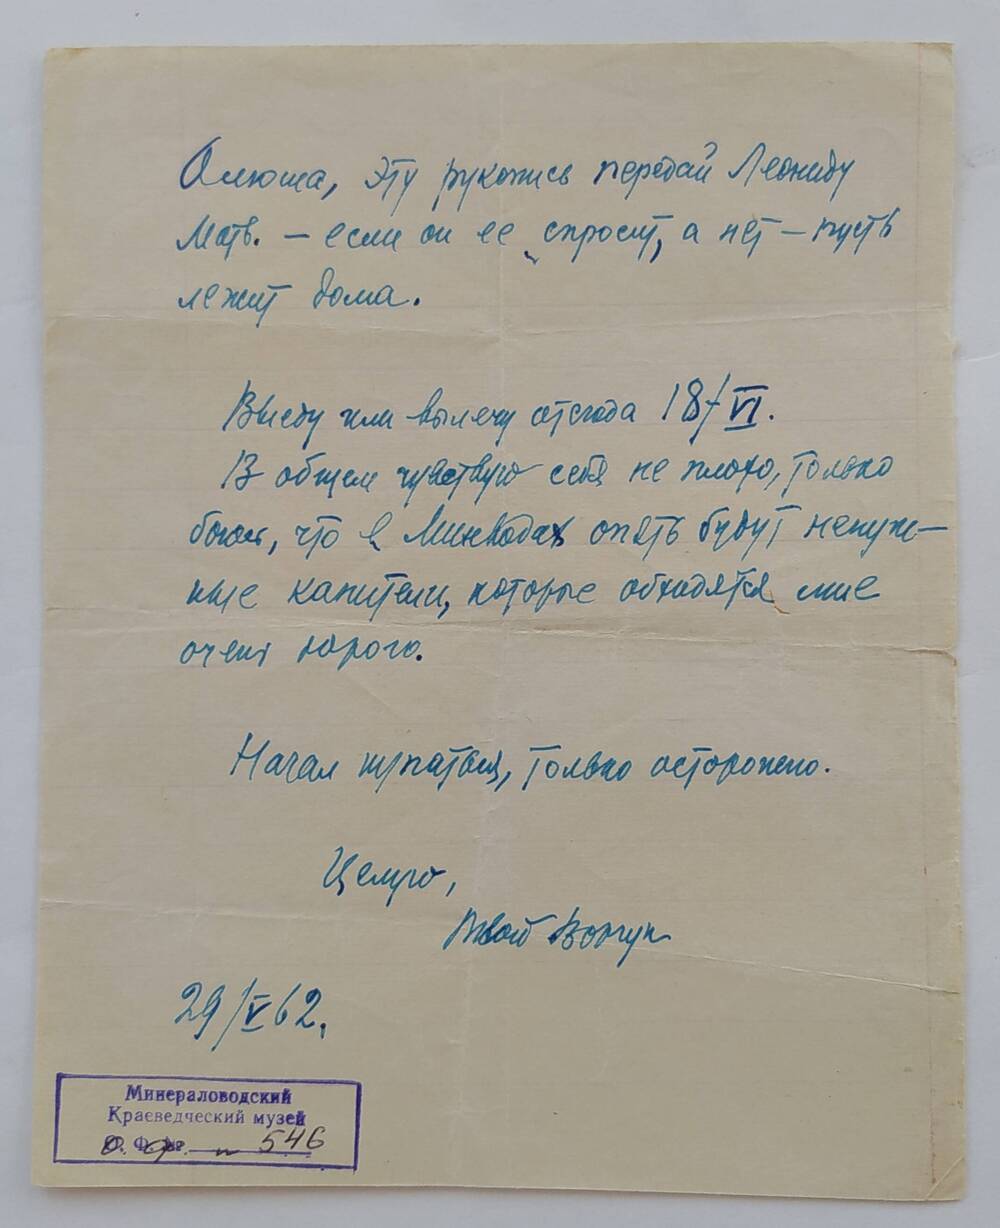 Письмо Ольге Бауэр от отца, датировано 29/V-62 г.